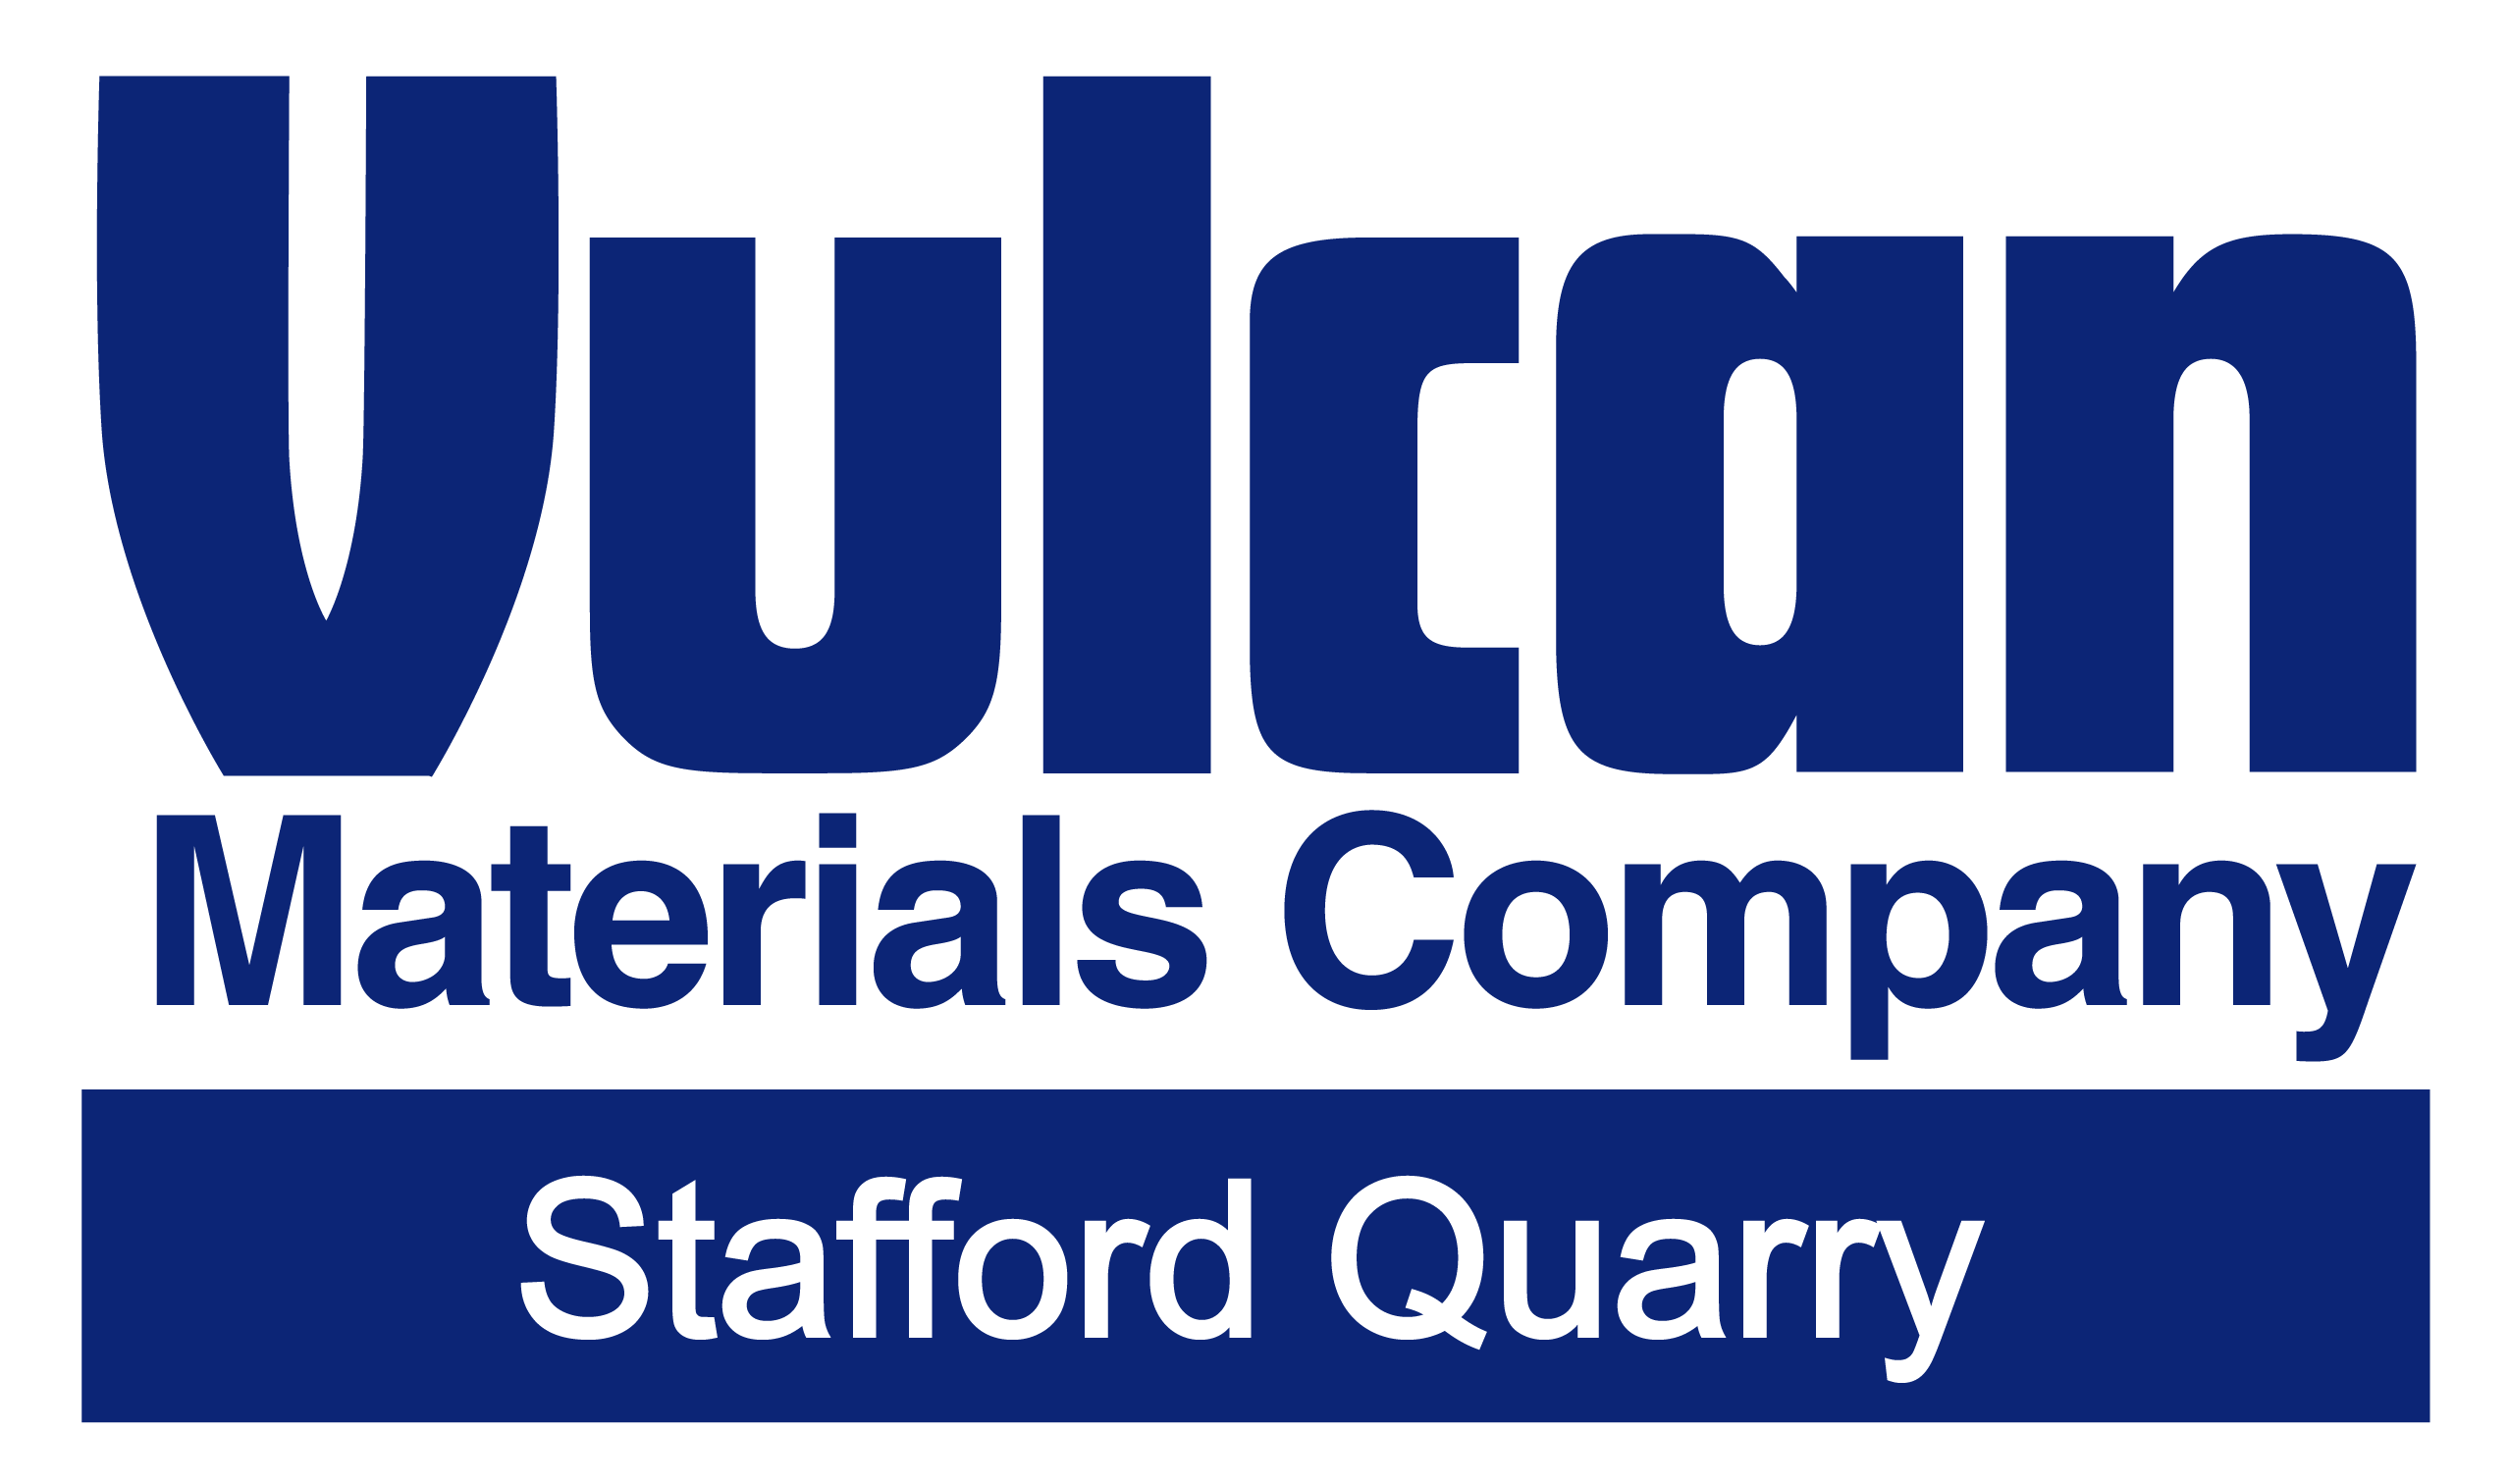 Vulcan Materials Company – Stafford Quarry